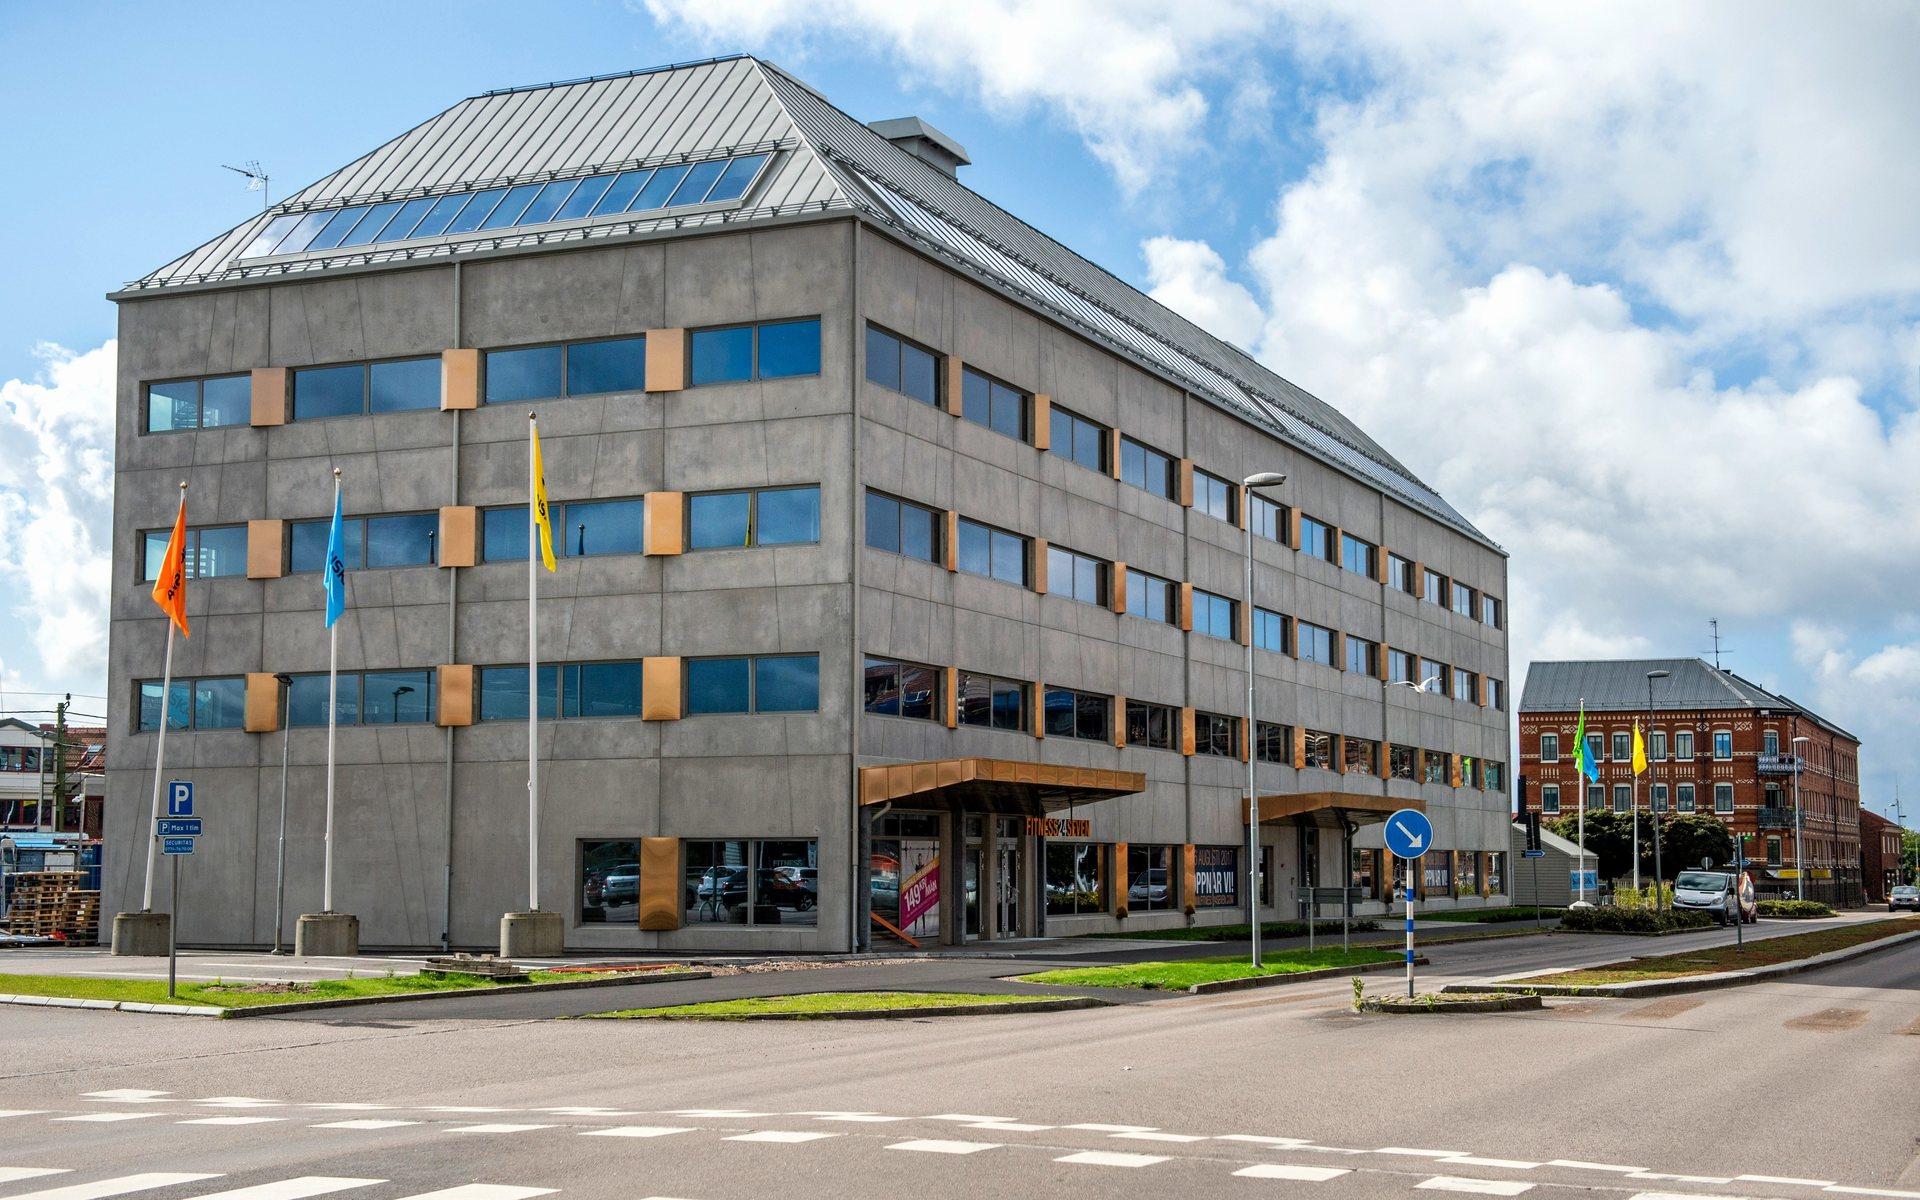 Skanskas kontorshus vid Gamletullsgatan fick 2017 utmärkelsen Sveriges fulaste nybygge.